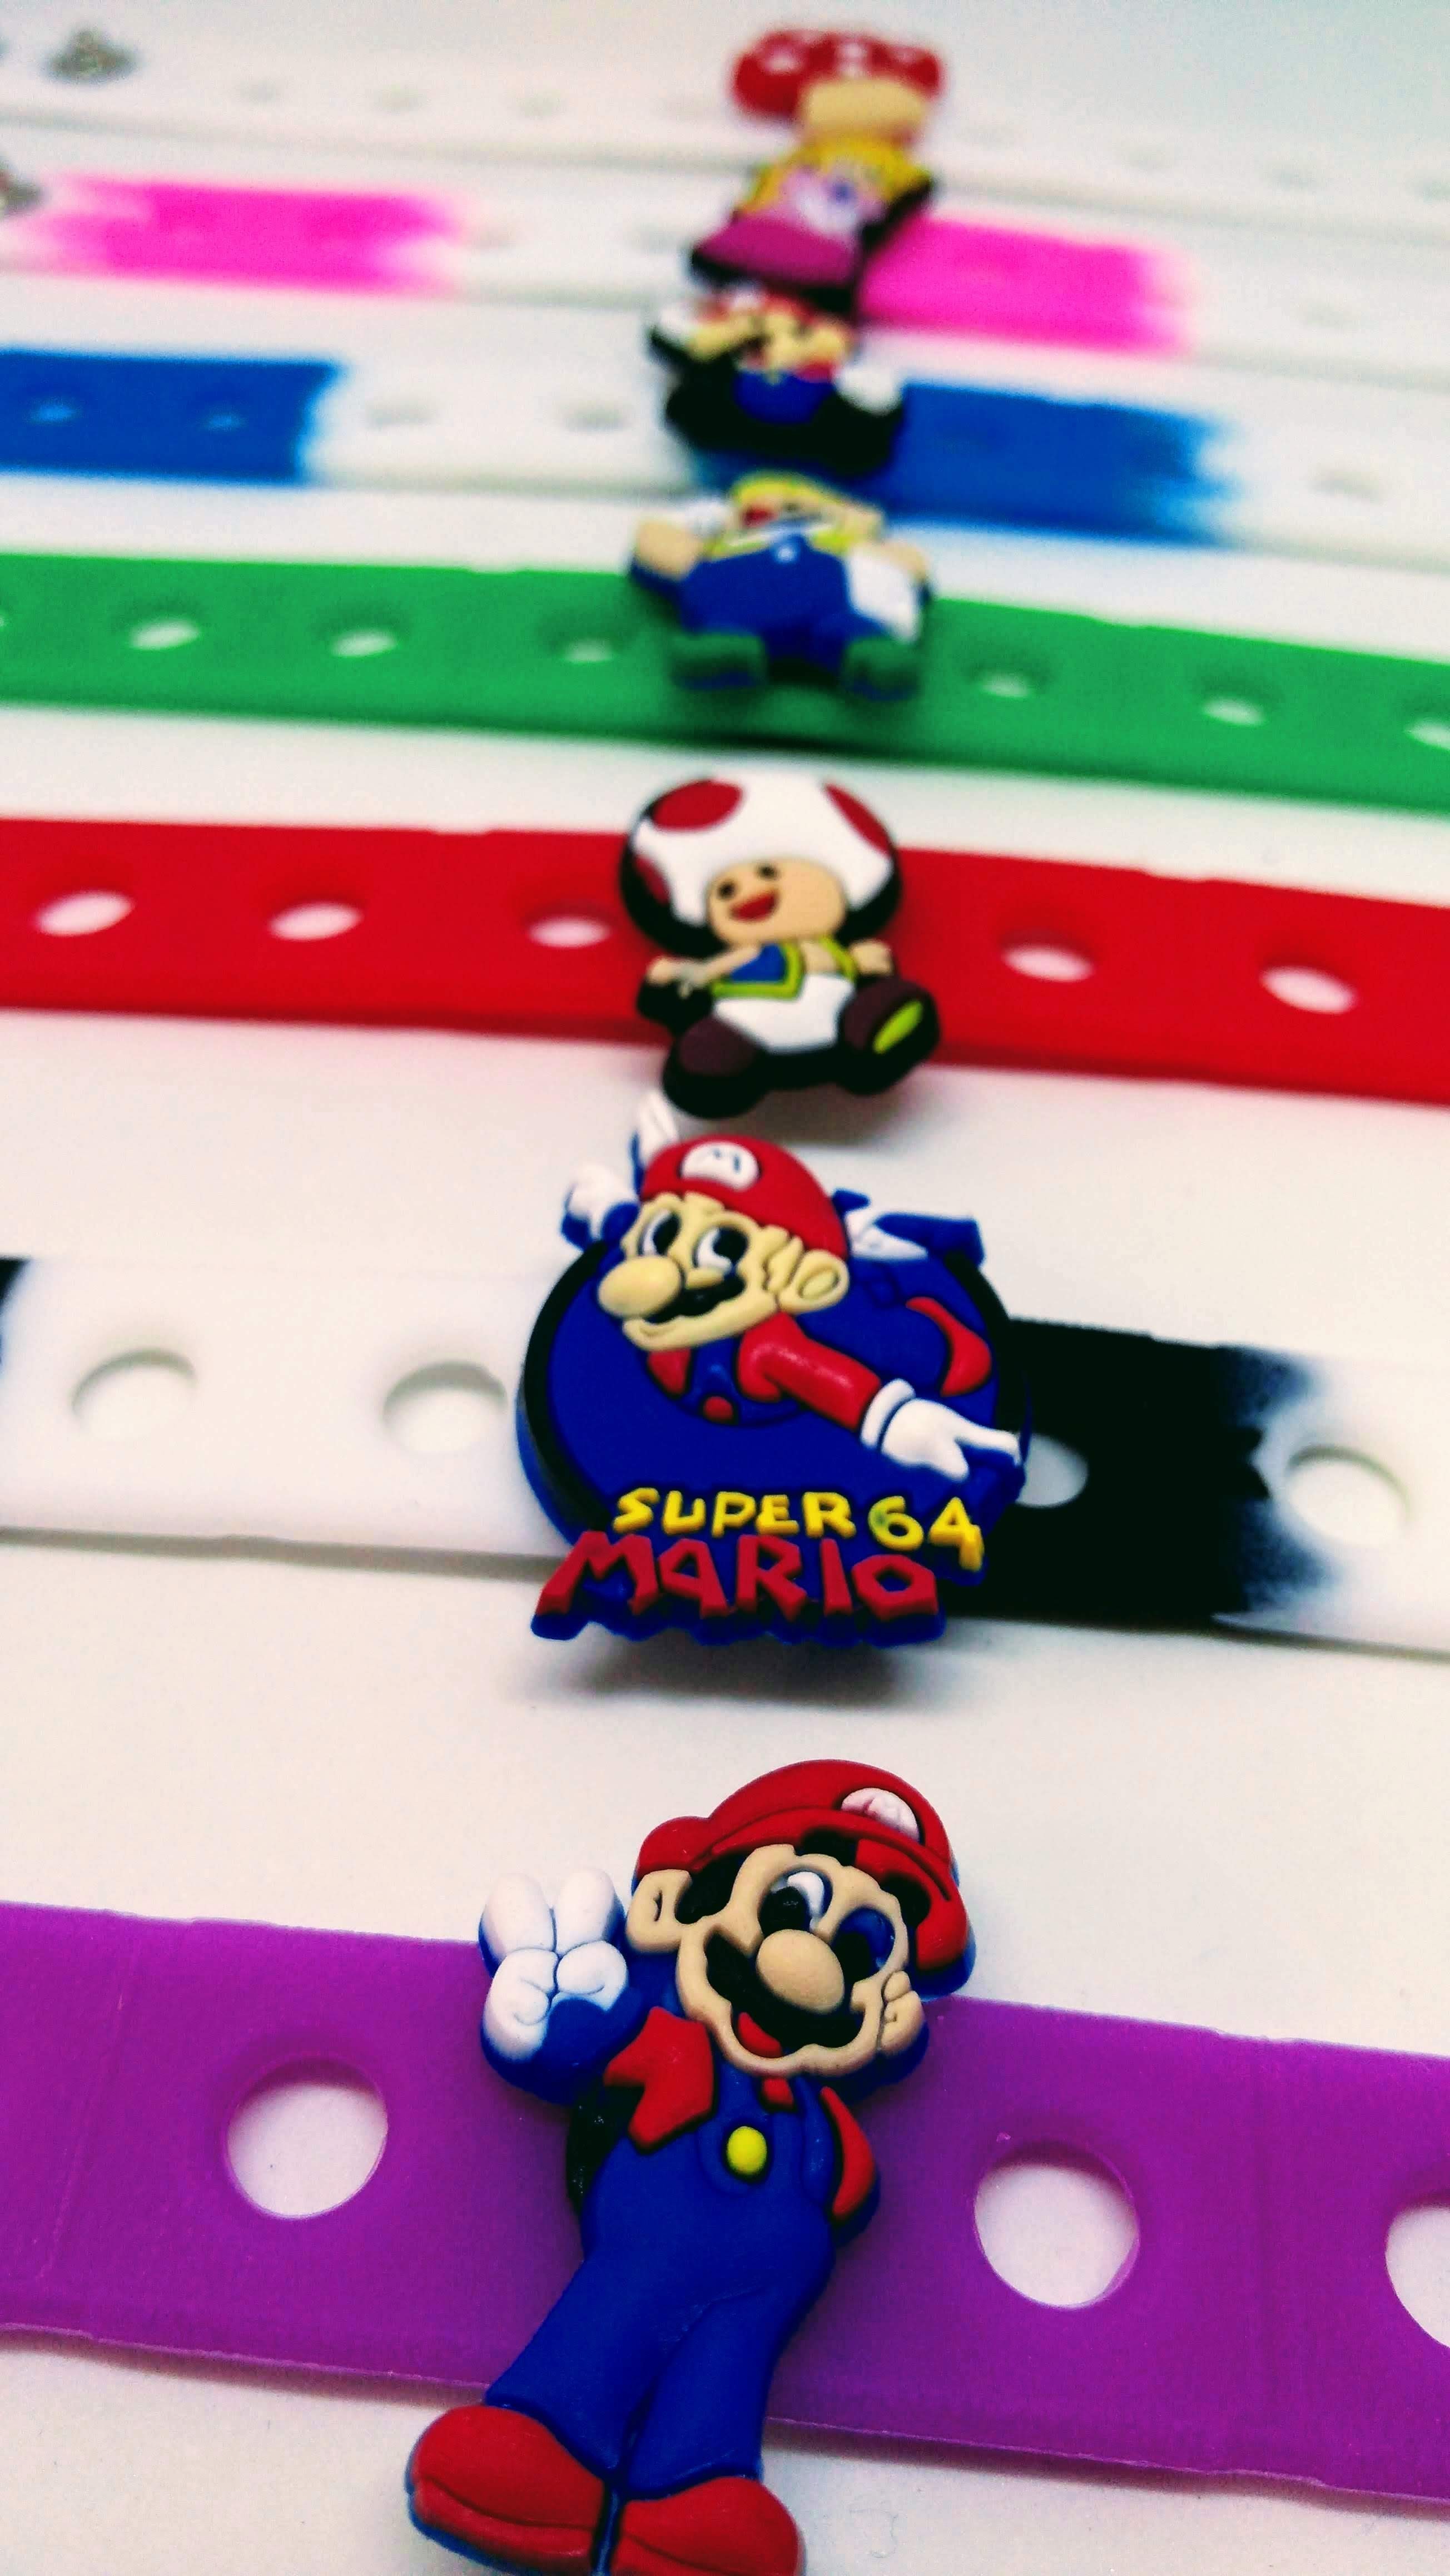 Super Mario Bros gadgets regalini addobbi festa a tema